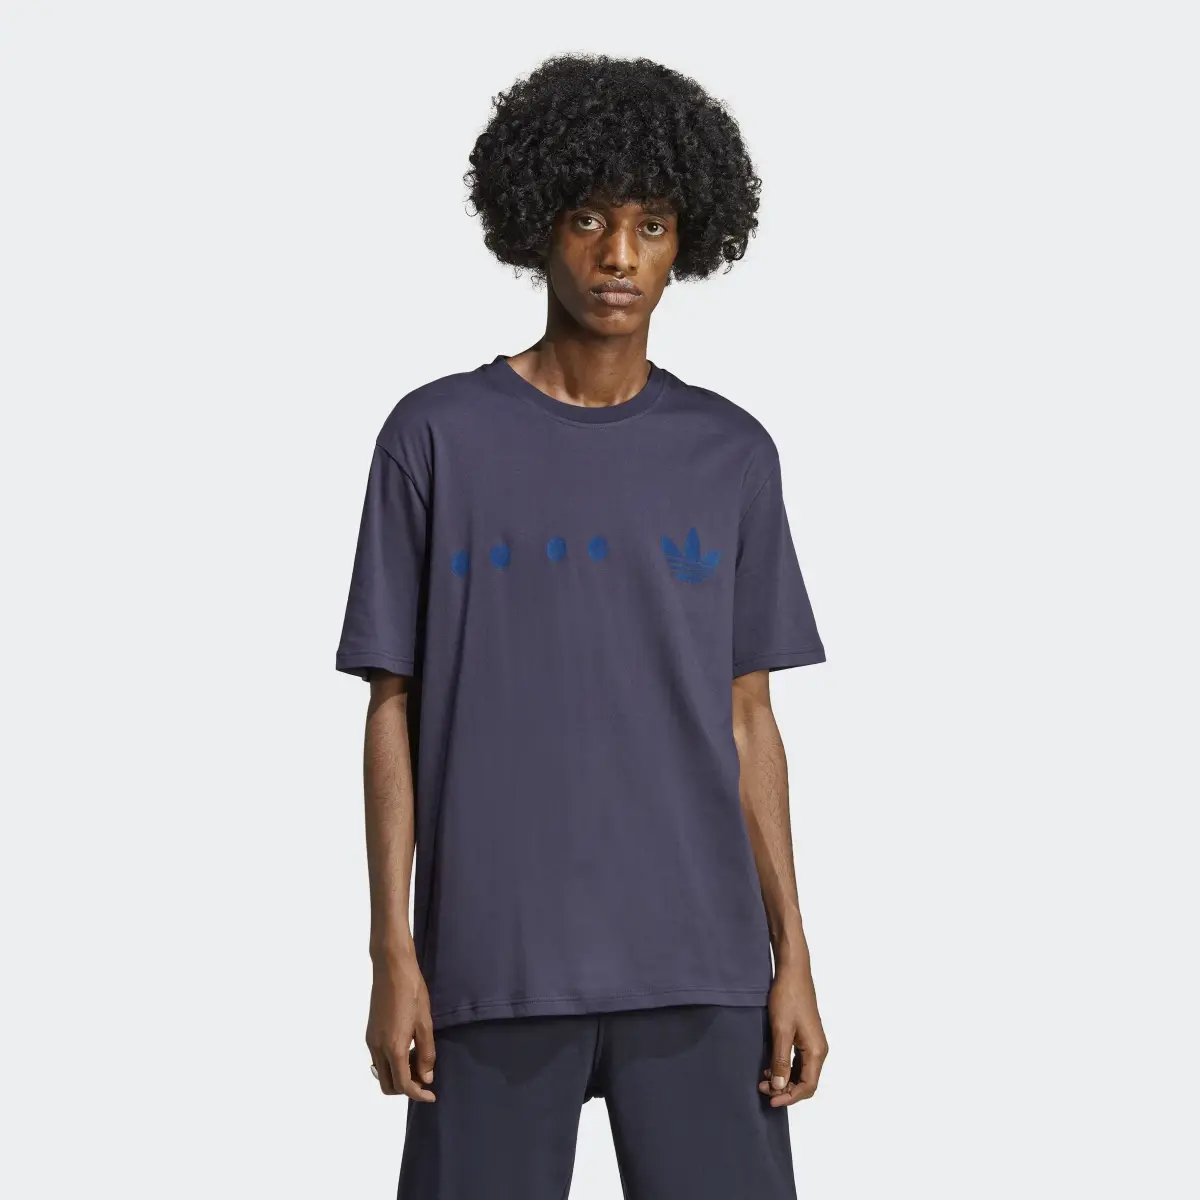 Adidas RIFTA City Boy Graphic T-Shirt. 2